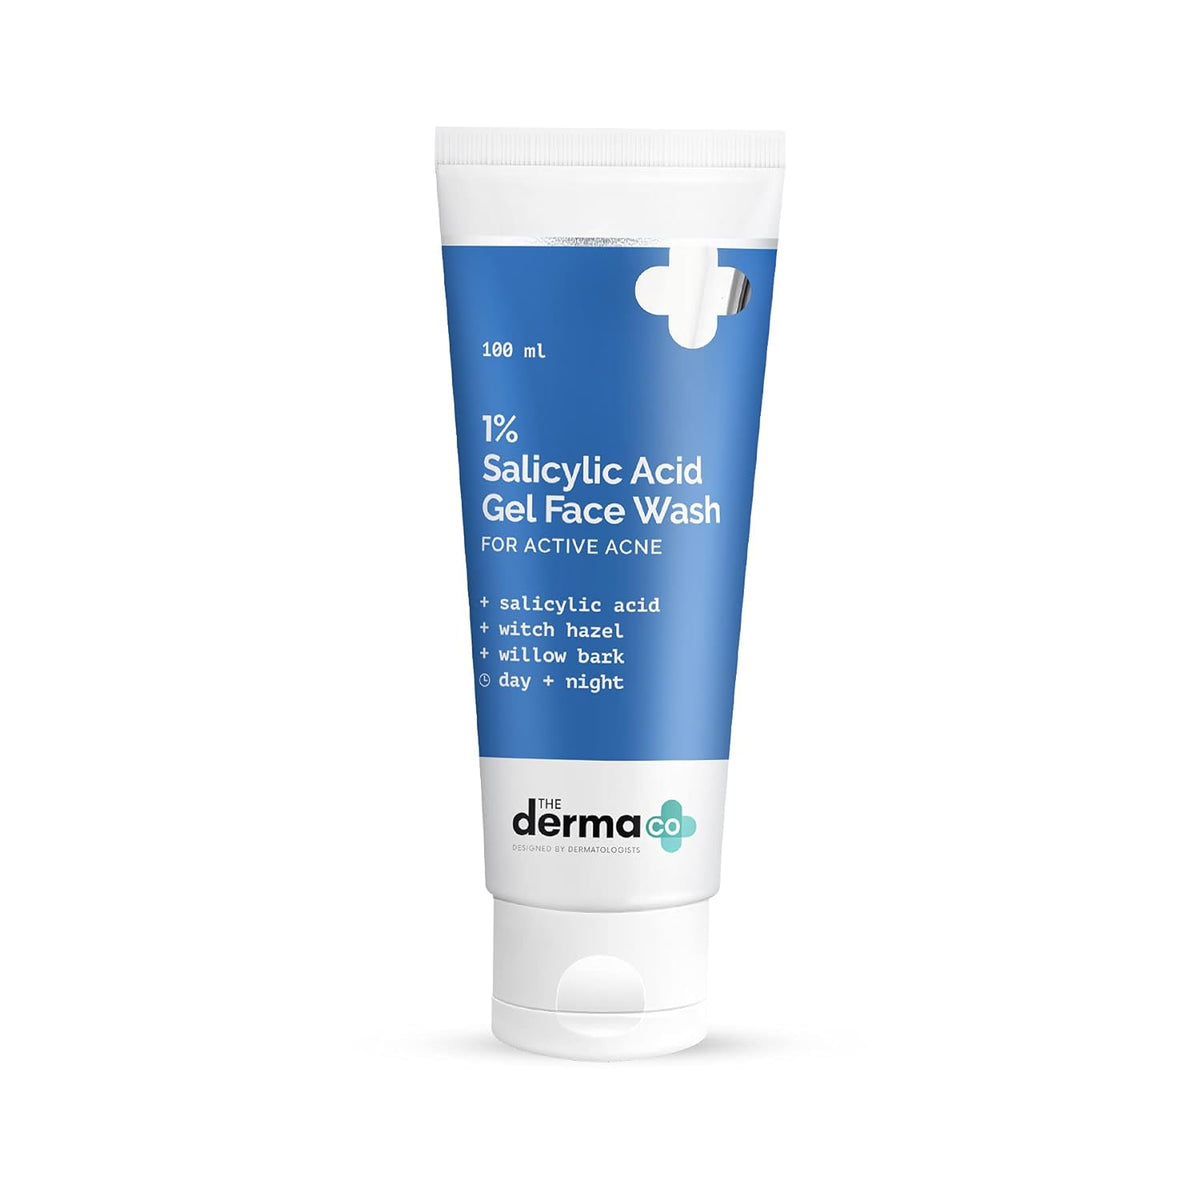 The Derma Co 1% Salicylic Acid Gel Face Wash with Salicylic Acid & Witch Hazel - 100ml (Pack of 2)